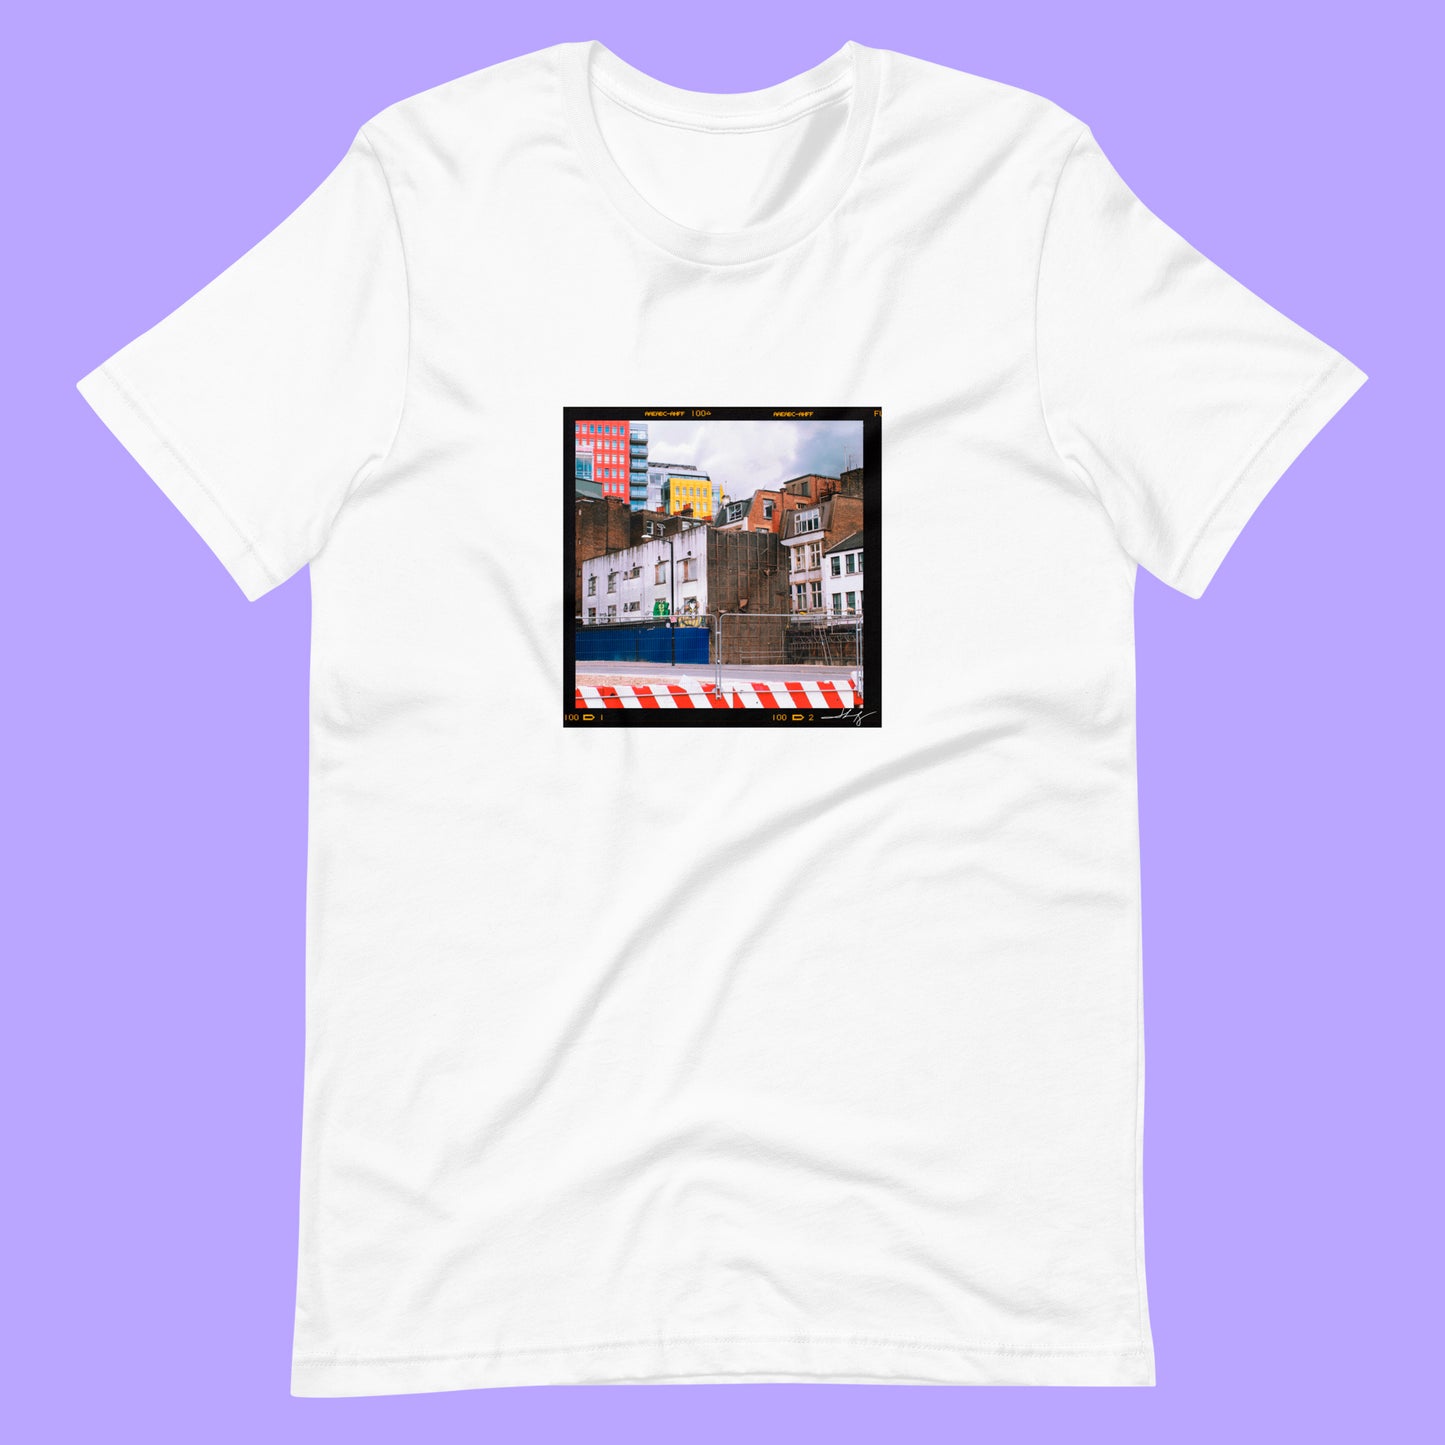 Unisex T-Shirt "Collage City"